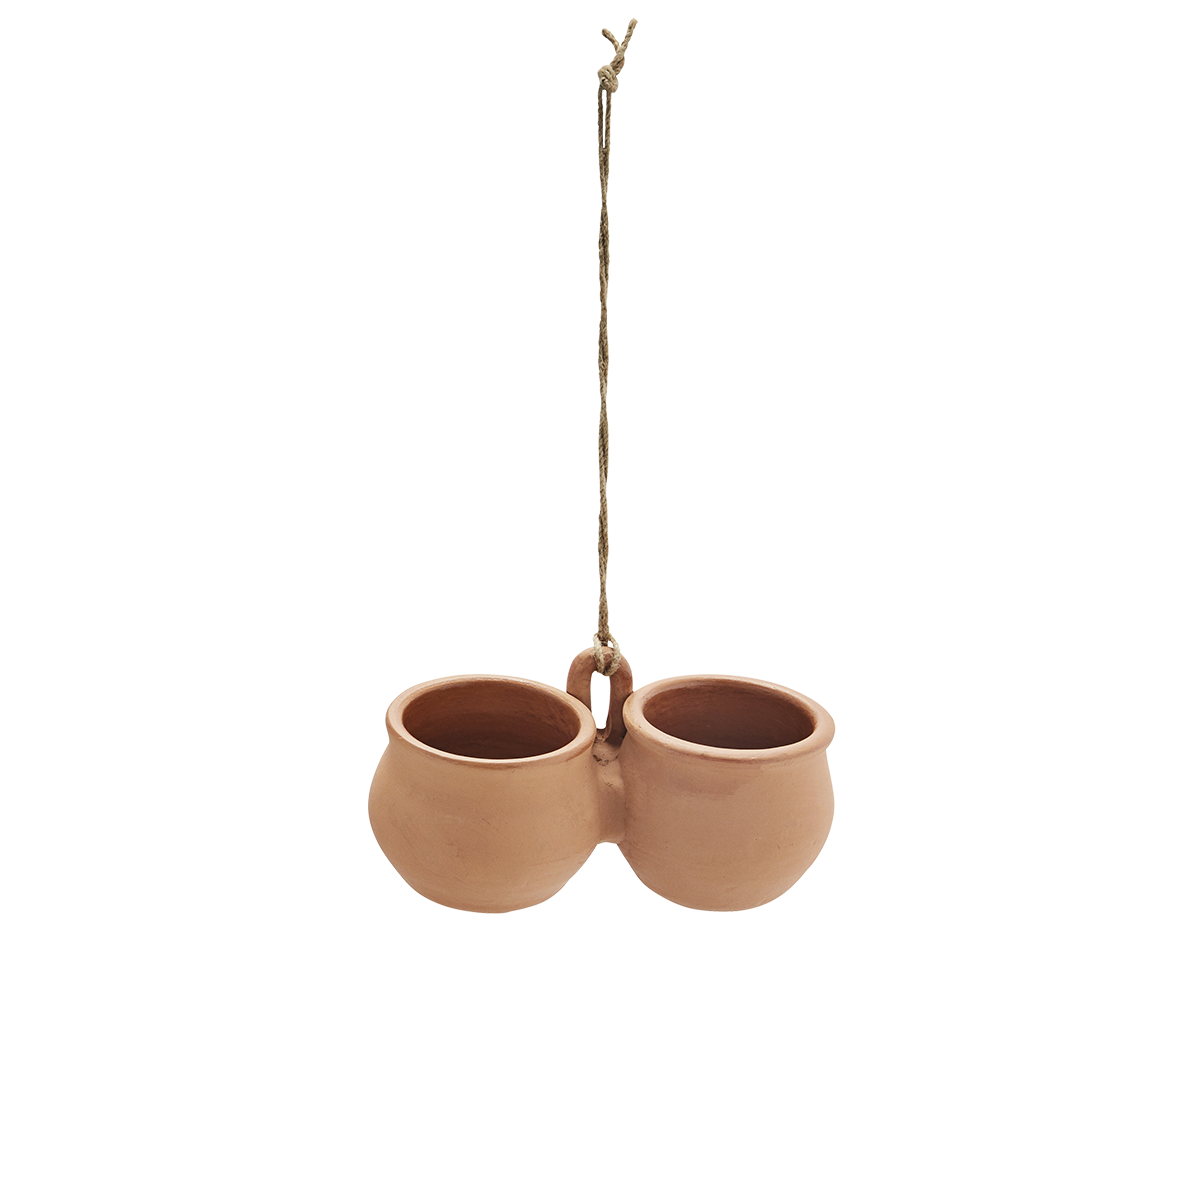 Hanging terracotta flower pots